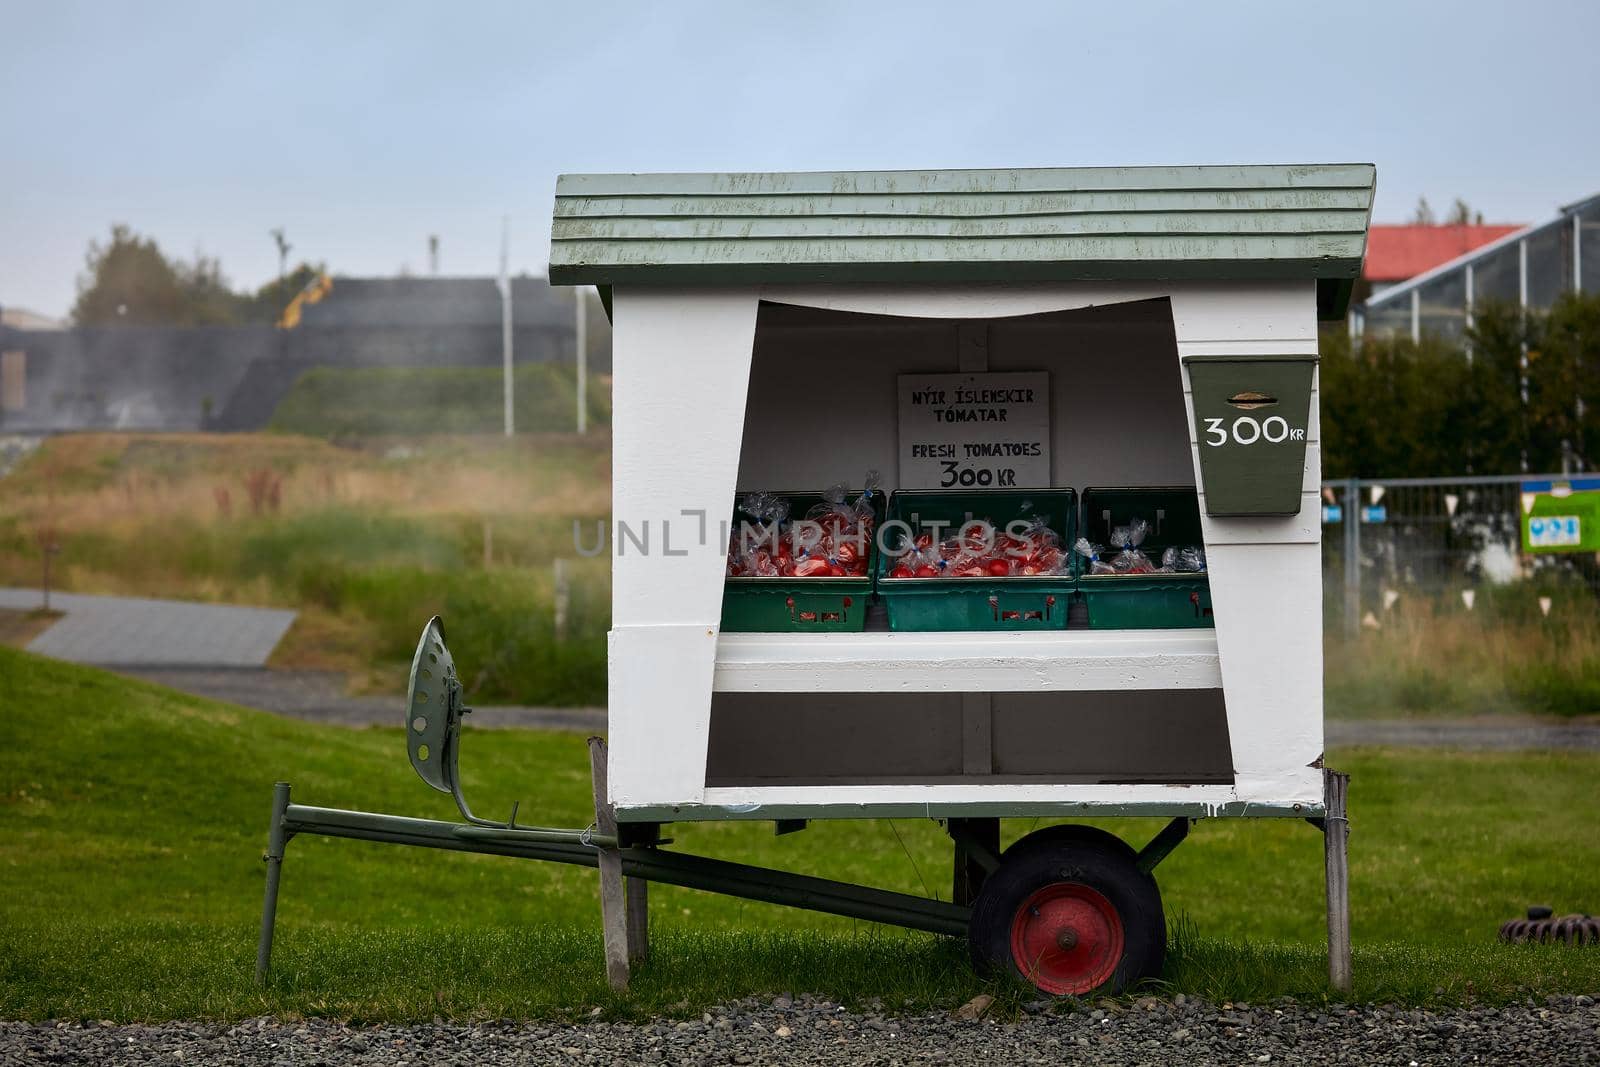 Selling fresh tomatoes. Self-service kiosk. Iceland, September 2018 by EvgeniyQW